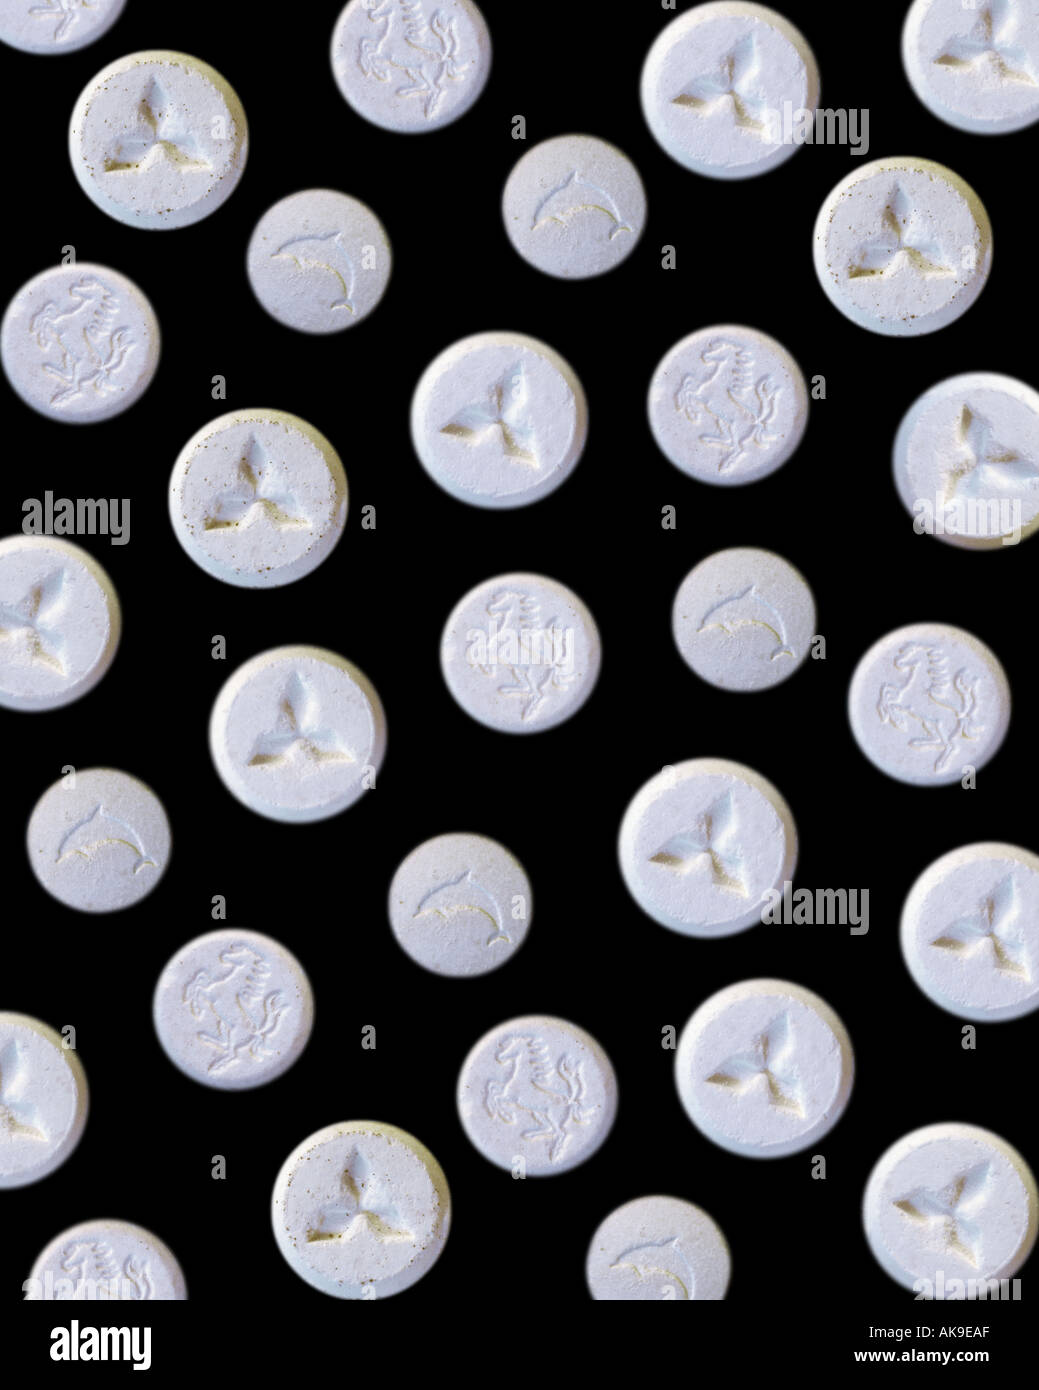 Variety of ecstasy pills Stock Photo - Alamy